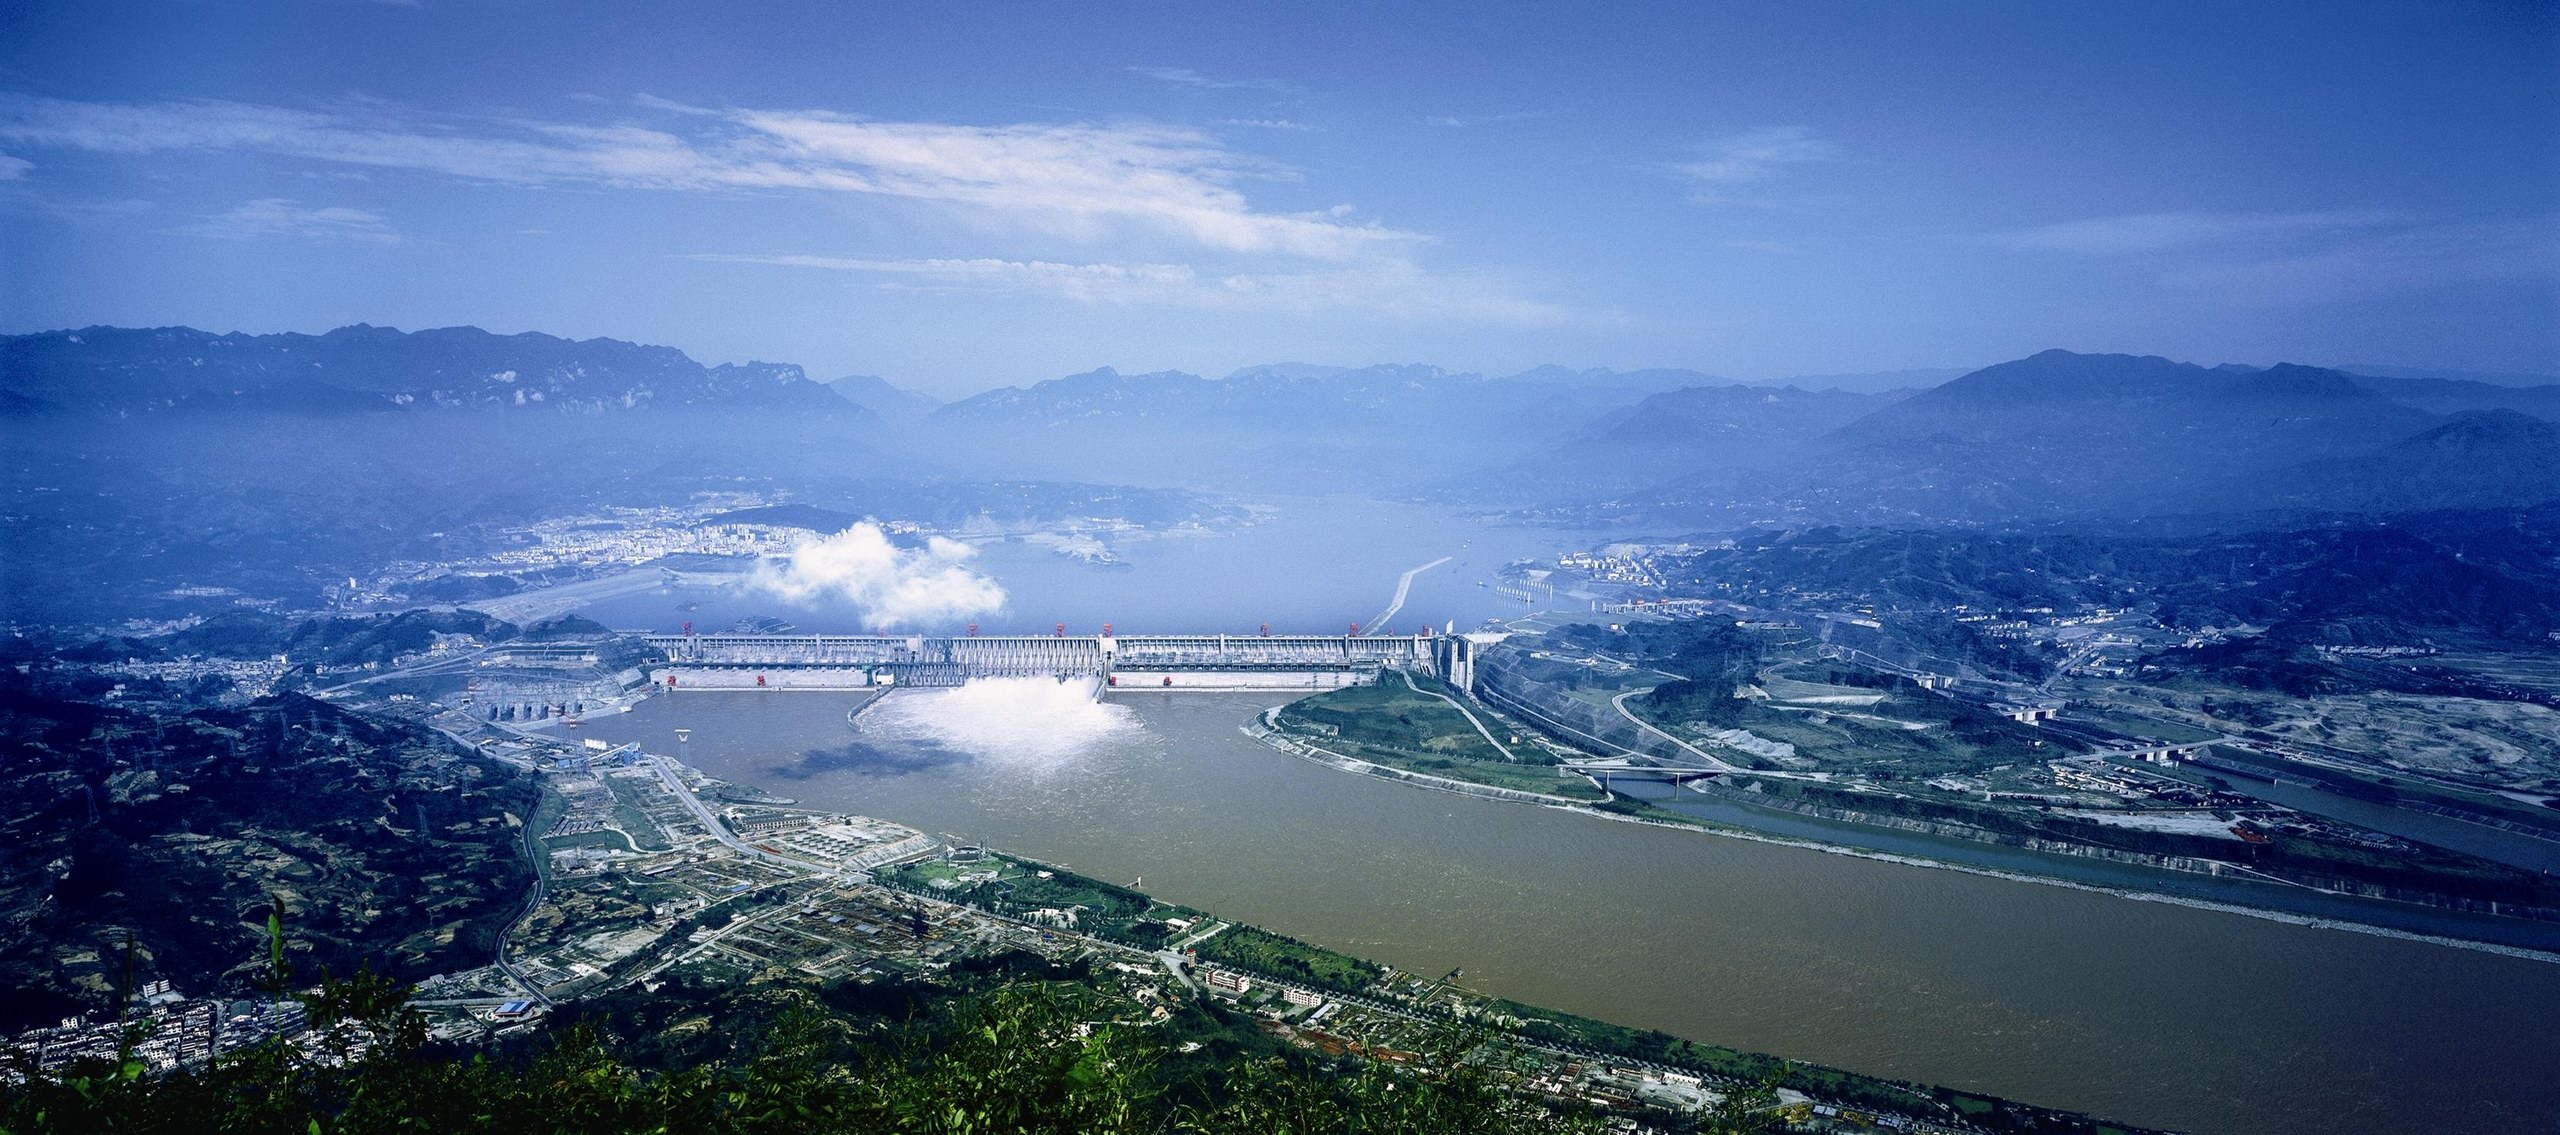 Three Gorges, Captivating wallpaper, Stunning natural wonder, Beautiful scenery, 2560x1140 Dual Screen Desktop